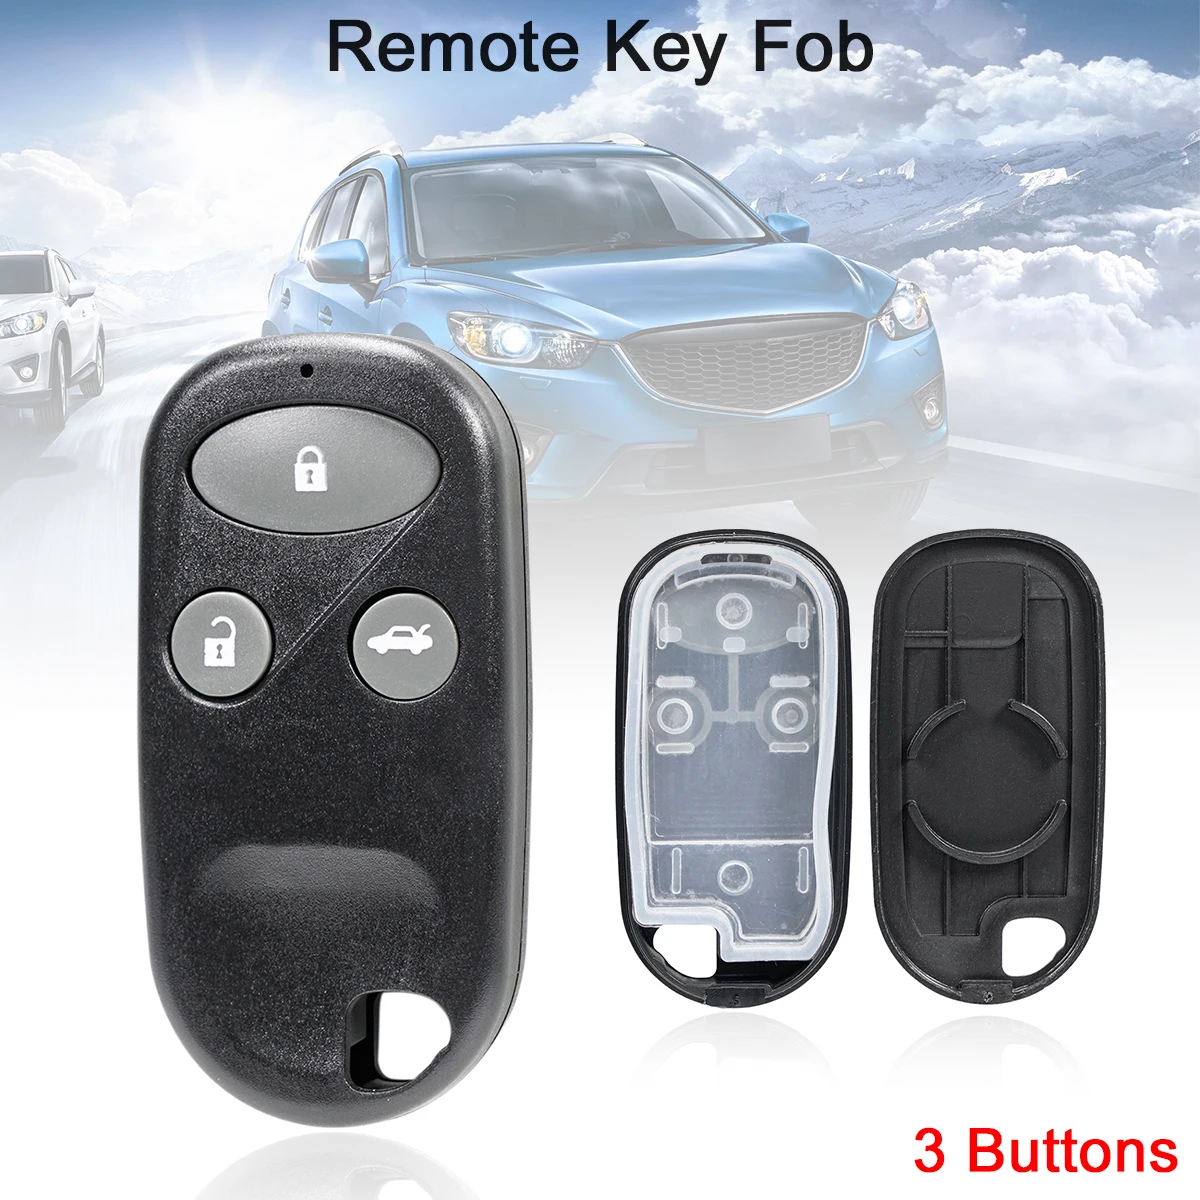 

3 Buttons Case Keyless Entry Remote Key Fob Shell for Honda Civic CRV Accord Jazz 2003 2004 2005 2006 2007 2008 2009 2010 2011